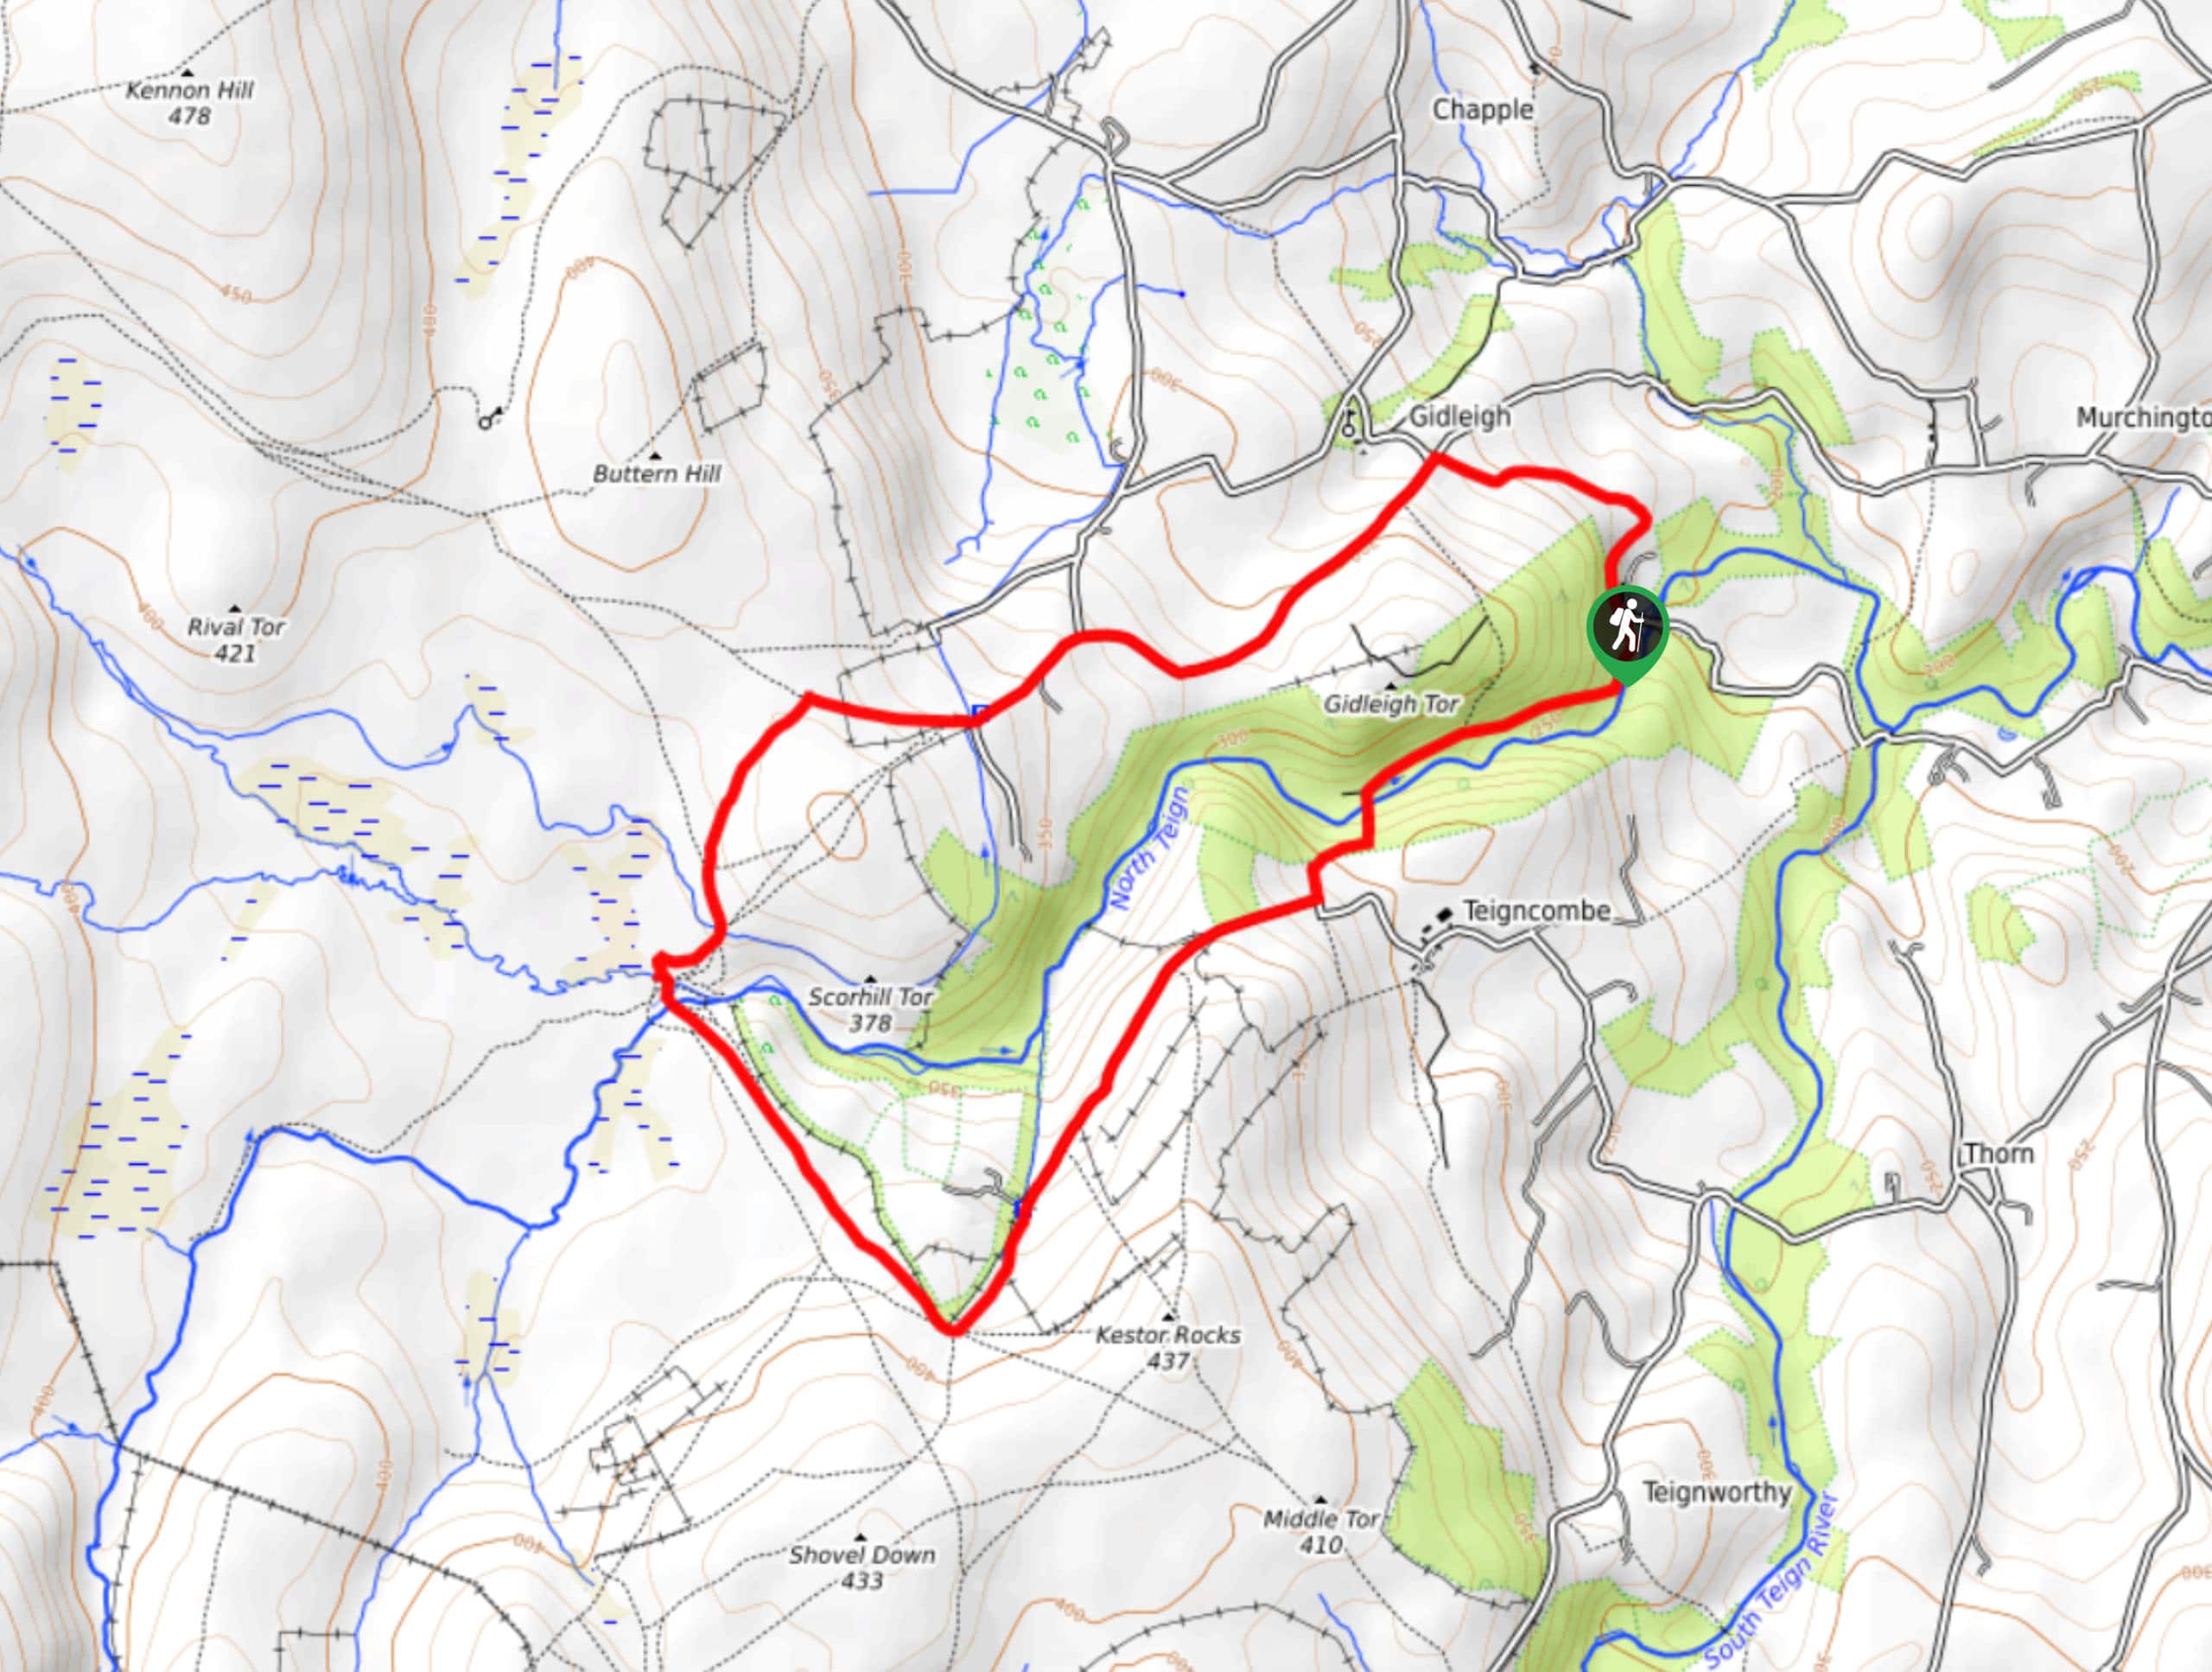 Gidleigh Tor and Scorhill Tor Walk Map